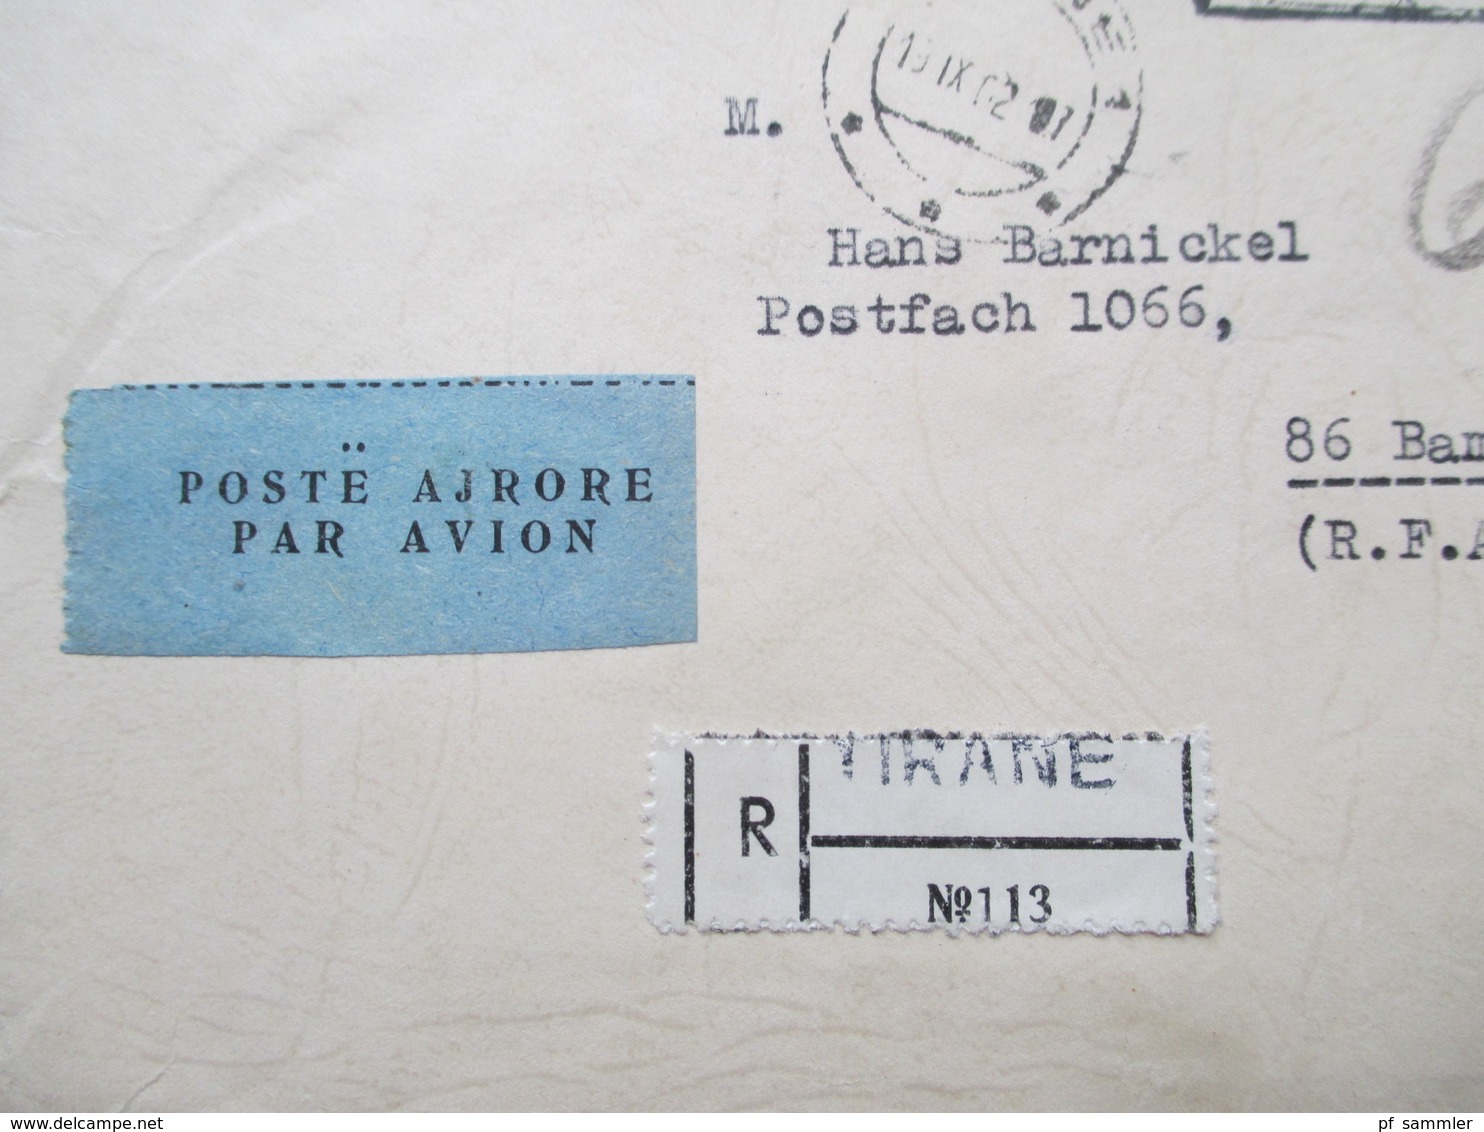 Albanien 1962 Stempel Taxe Percue / Exportal Tirana Albania Luftpost Einschreiben / Par Avion R-Zettel Tirane No 113 - Albanien